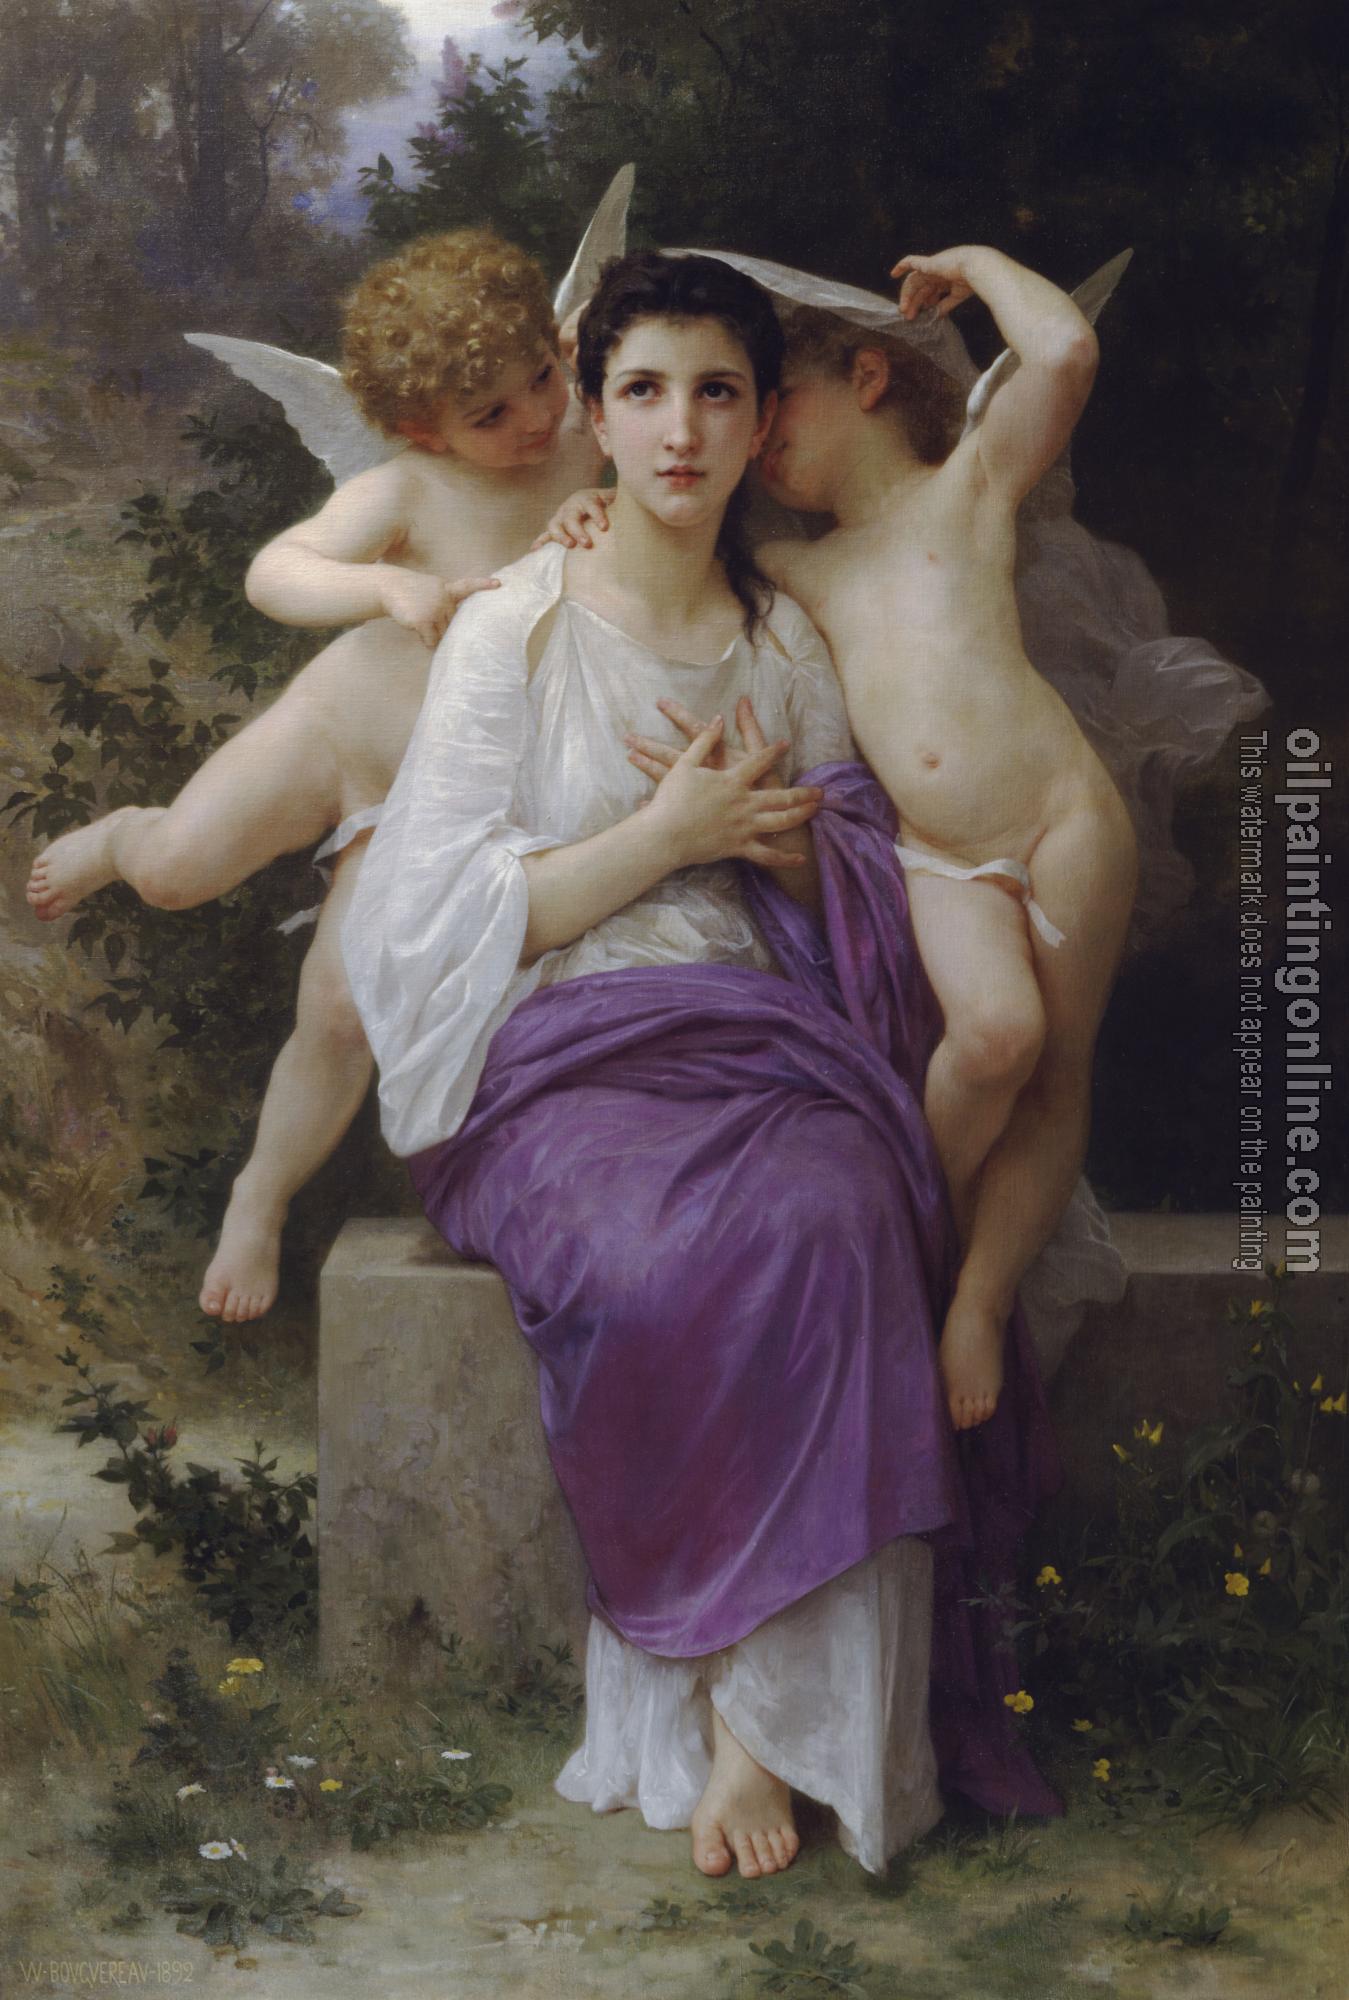 Bouguereau, William-Adolphe - The Heart's Awakening